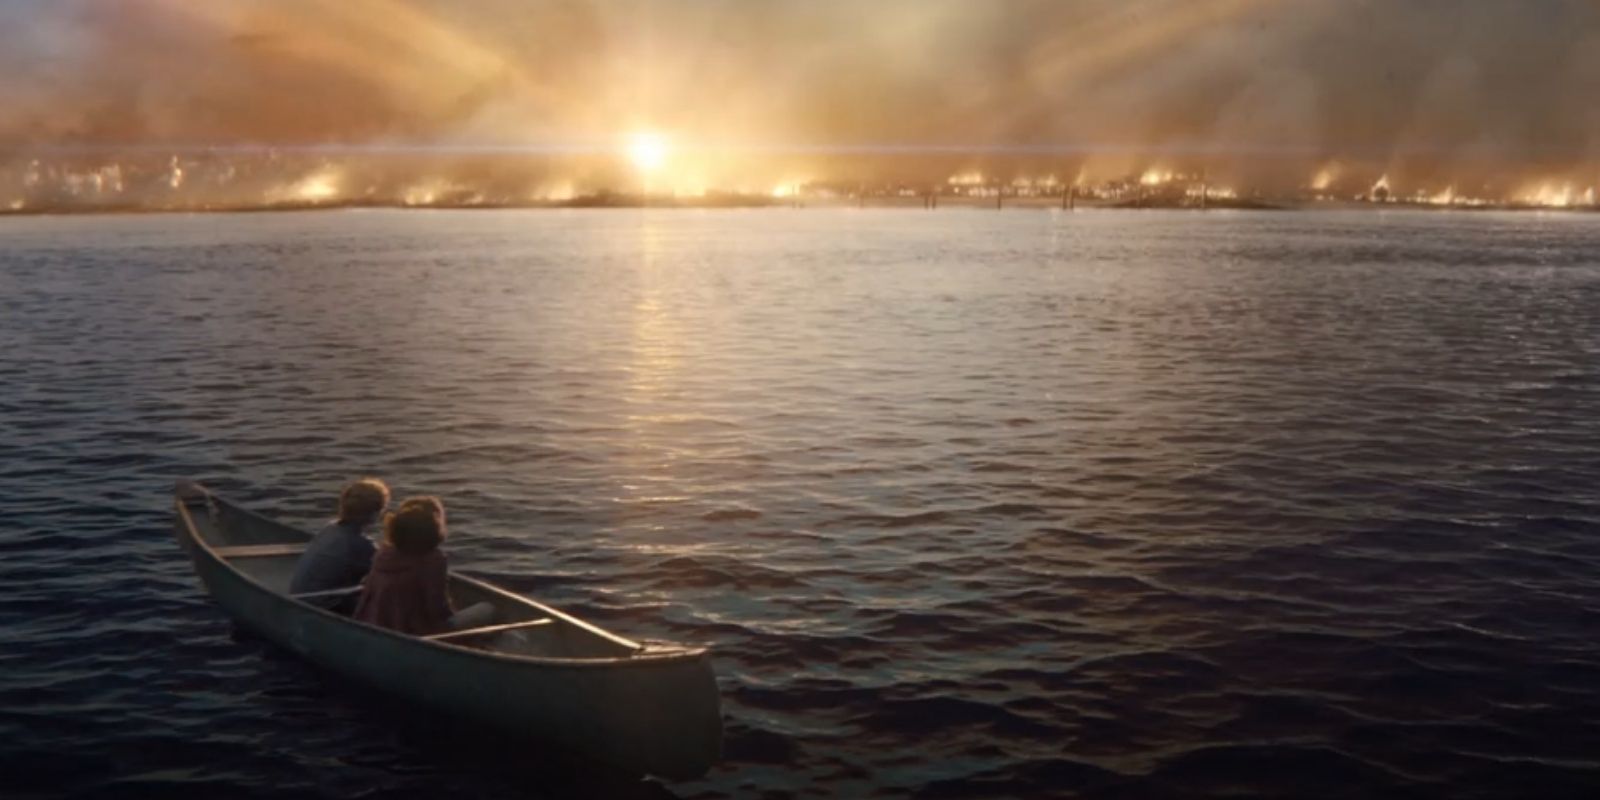 Leeza and Warren watch from a canoe as Crockett Island burns at sunrise in Midnight Mass.